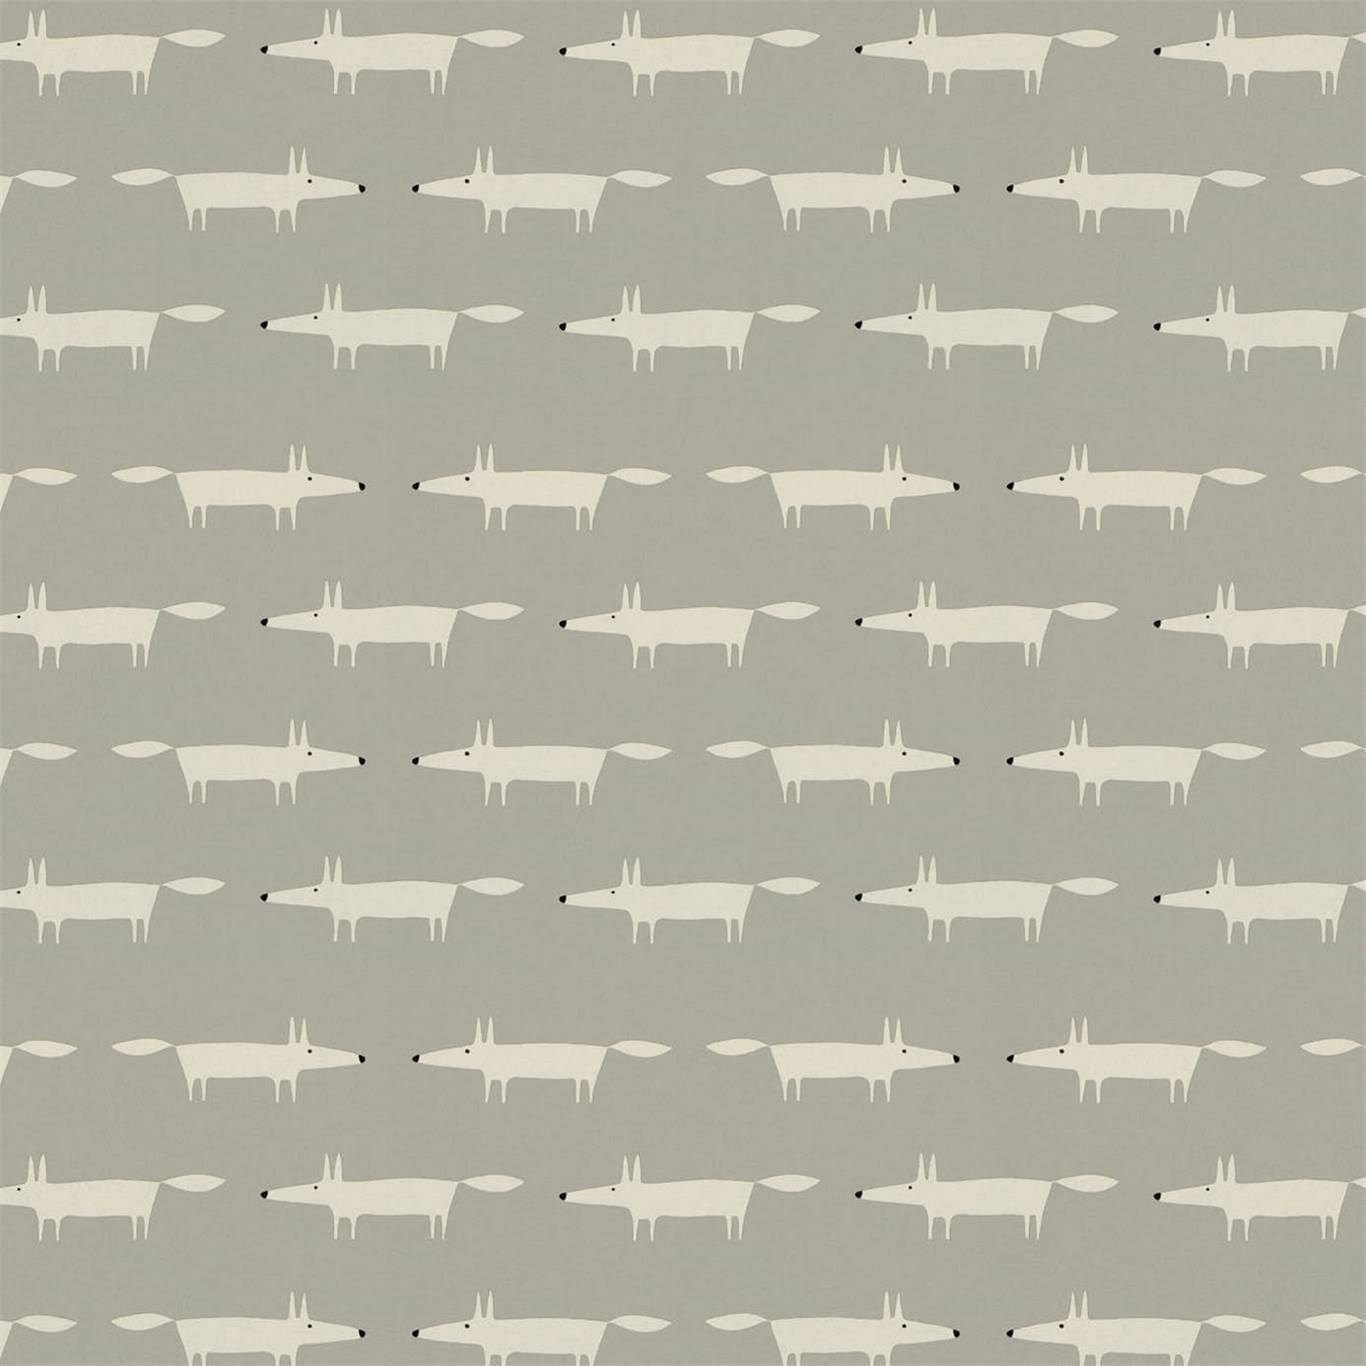 Little Fox Silver Wallpaper NESW112263 by Scion